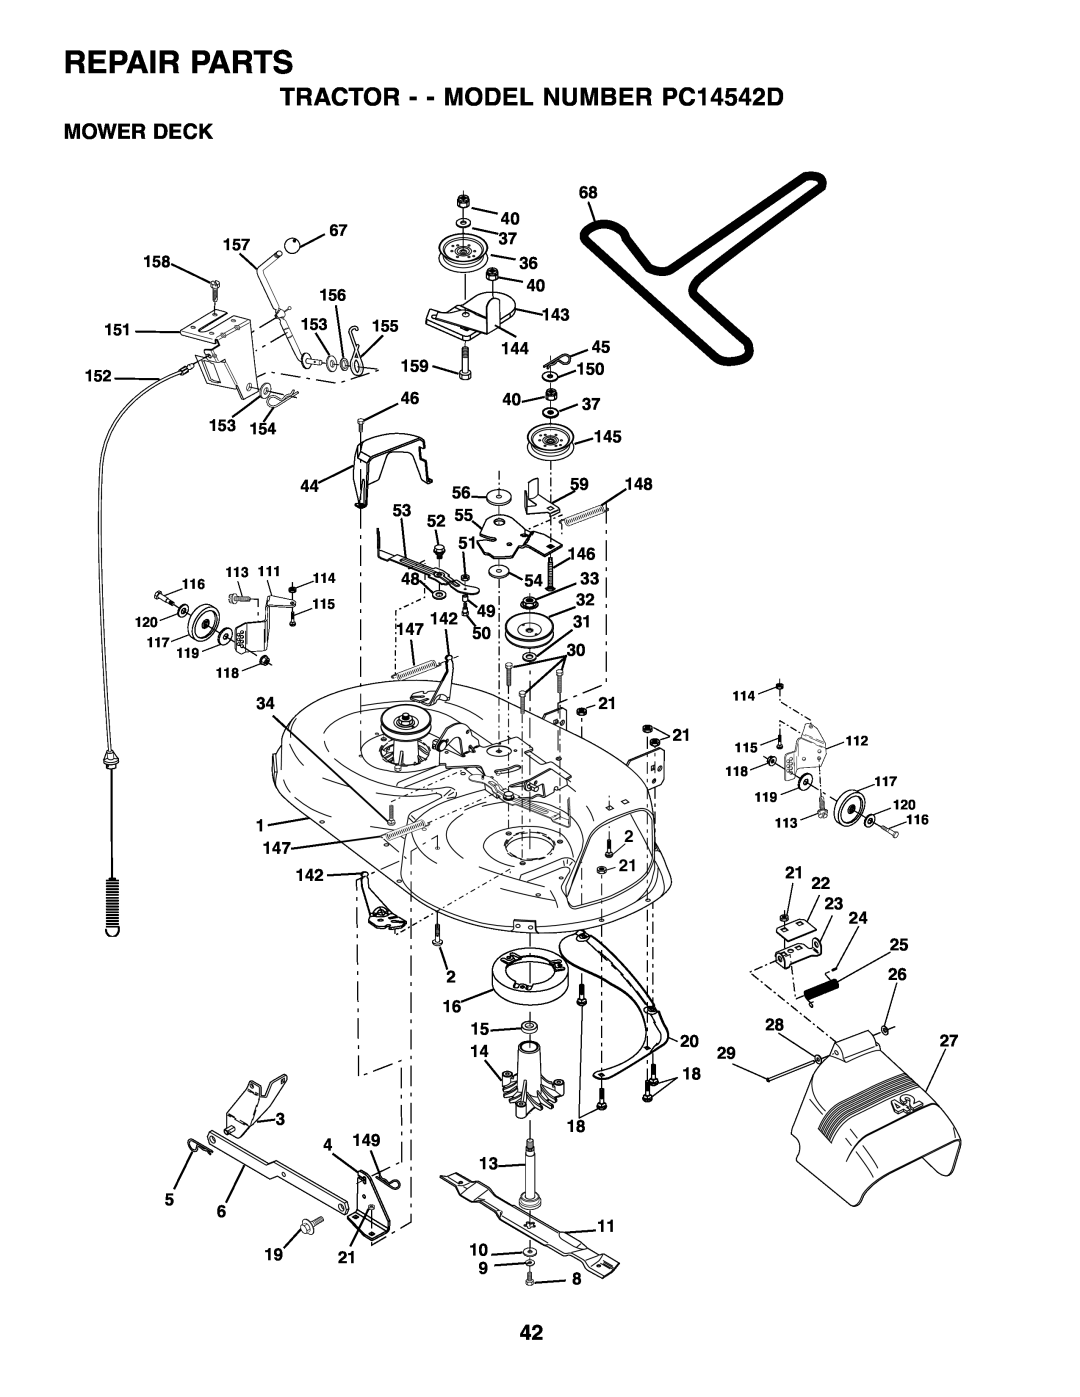 Poulan owner manual Repair Parts, TRACTOR - - MODEL NUMBER PC14542D, Mower Deck 